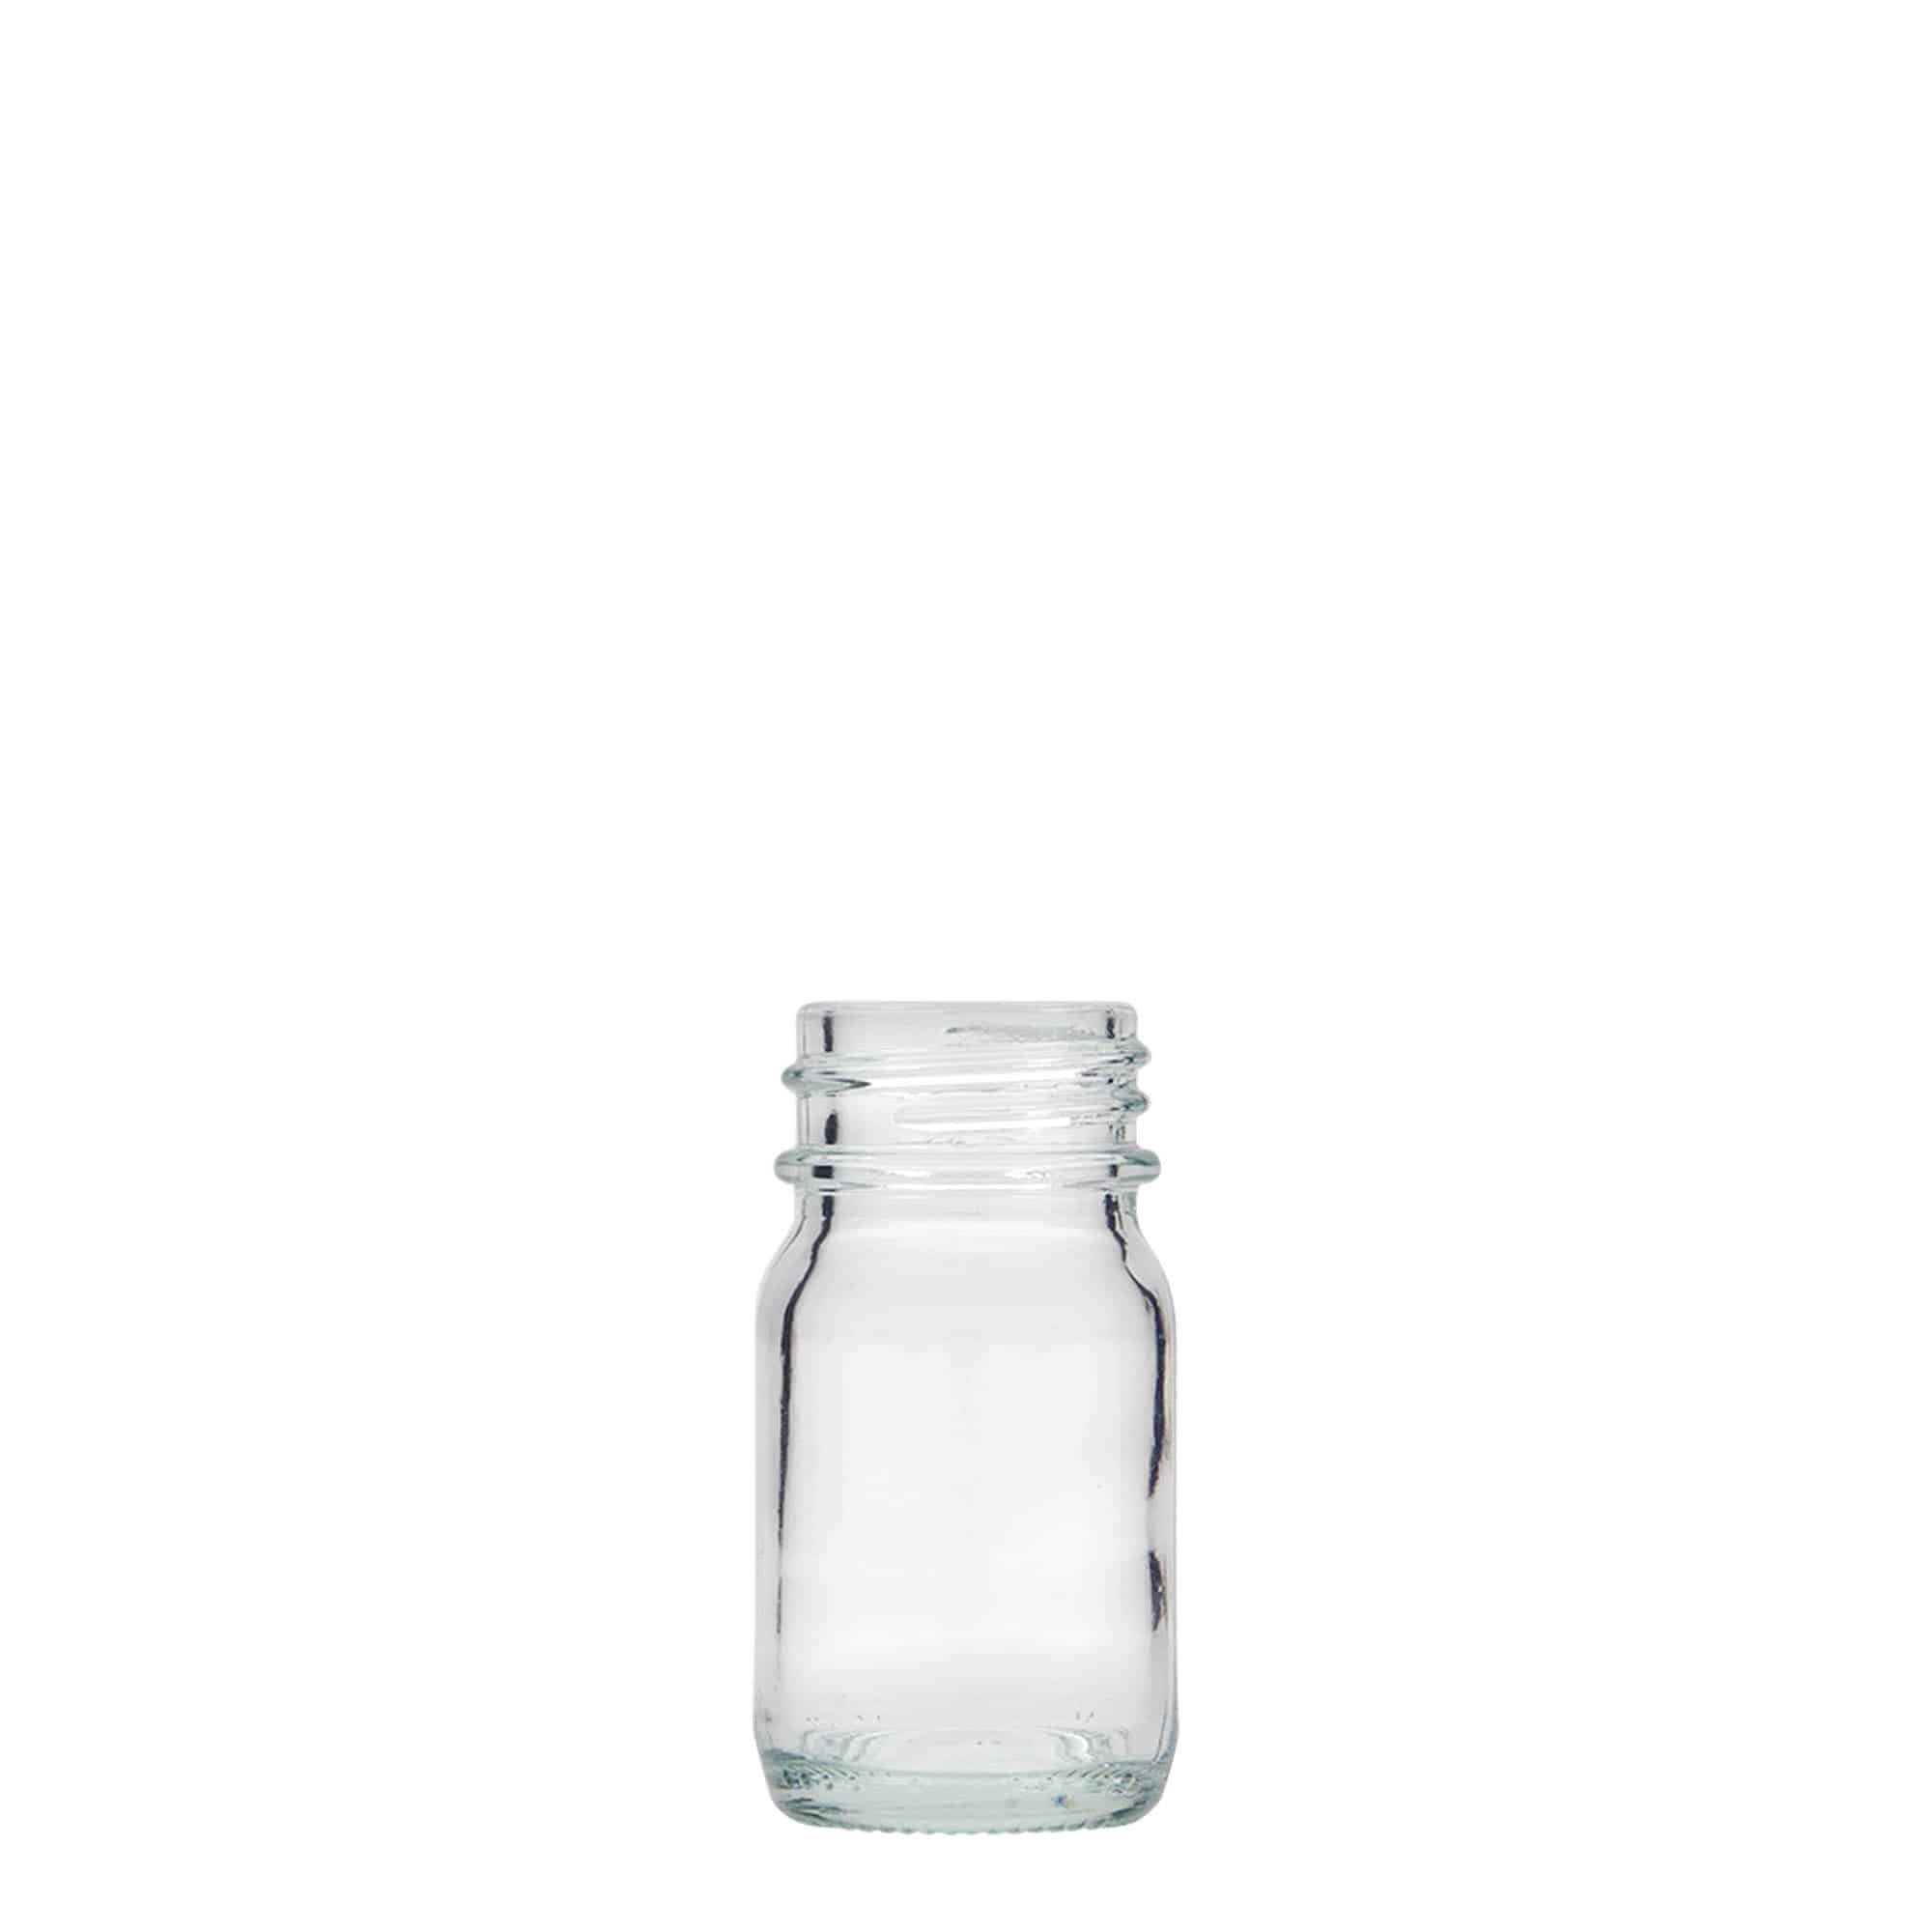 30 ml wide mouth jar, closure: DIN 32